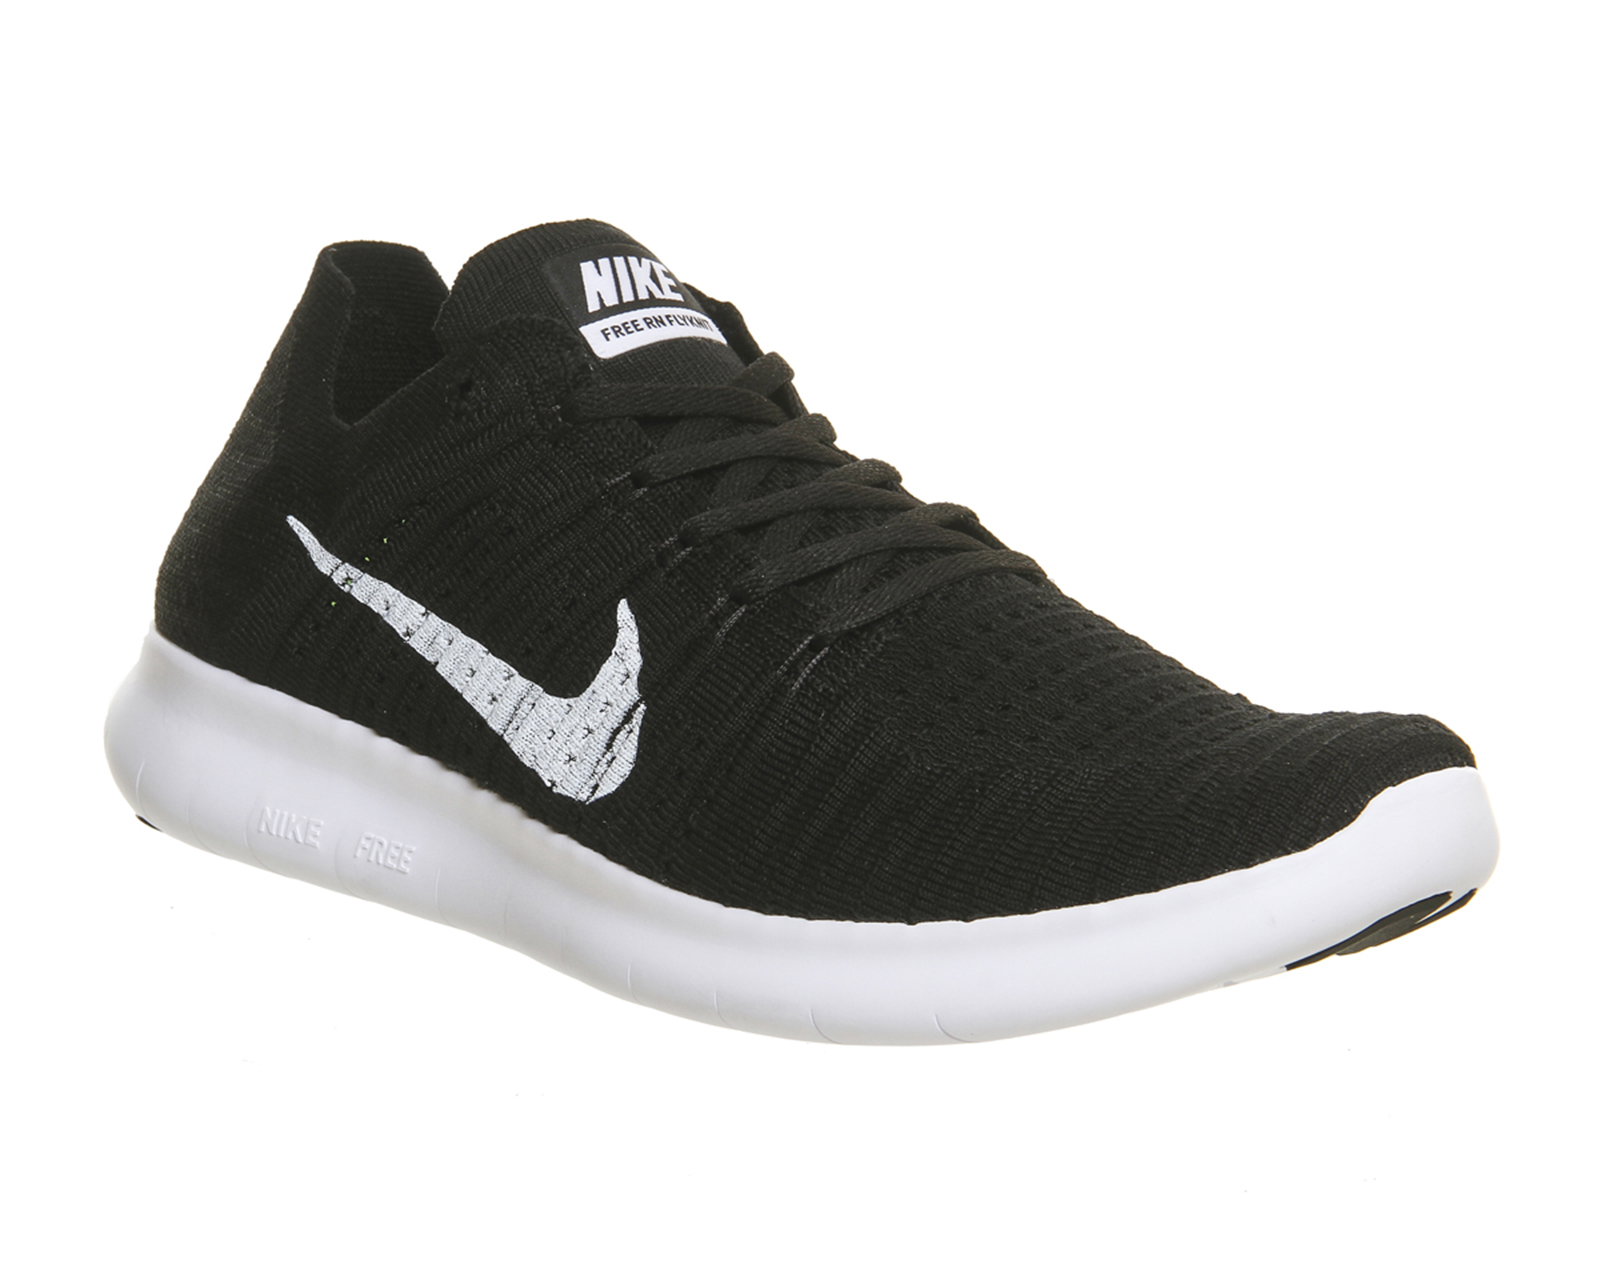 Nike Free Run Flyknit Black White - His trainers